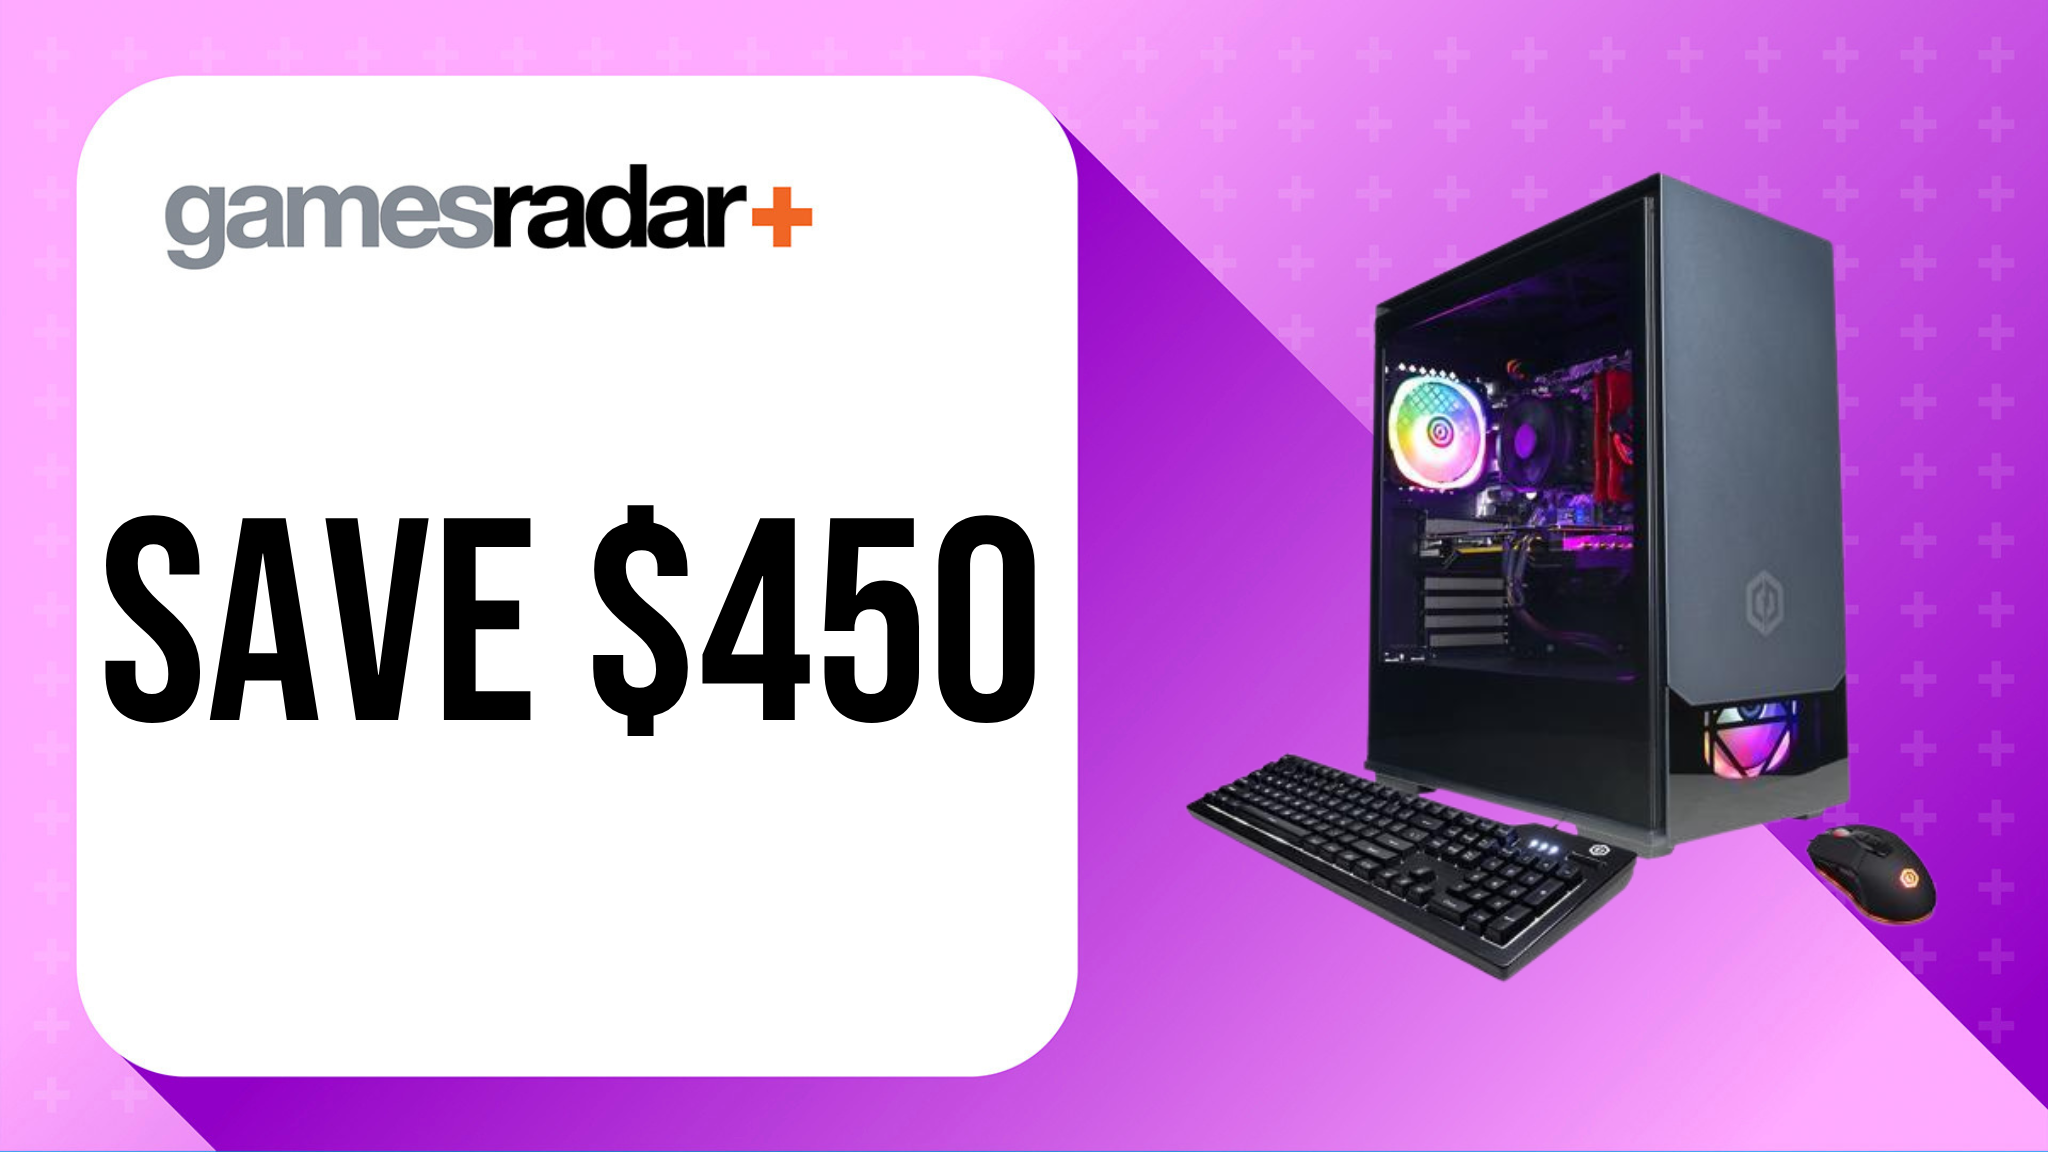 CyberpowerPC Gaming Desktop deal image with $450 saving